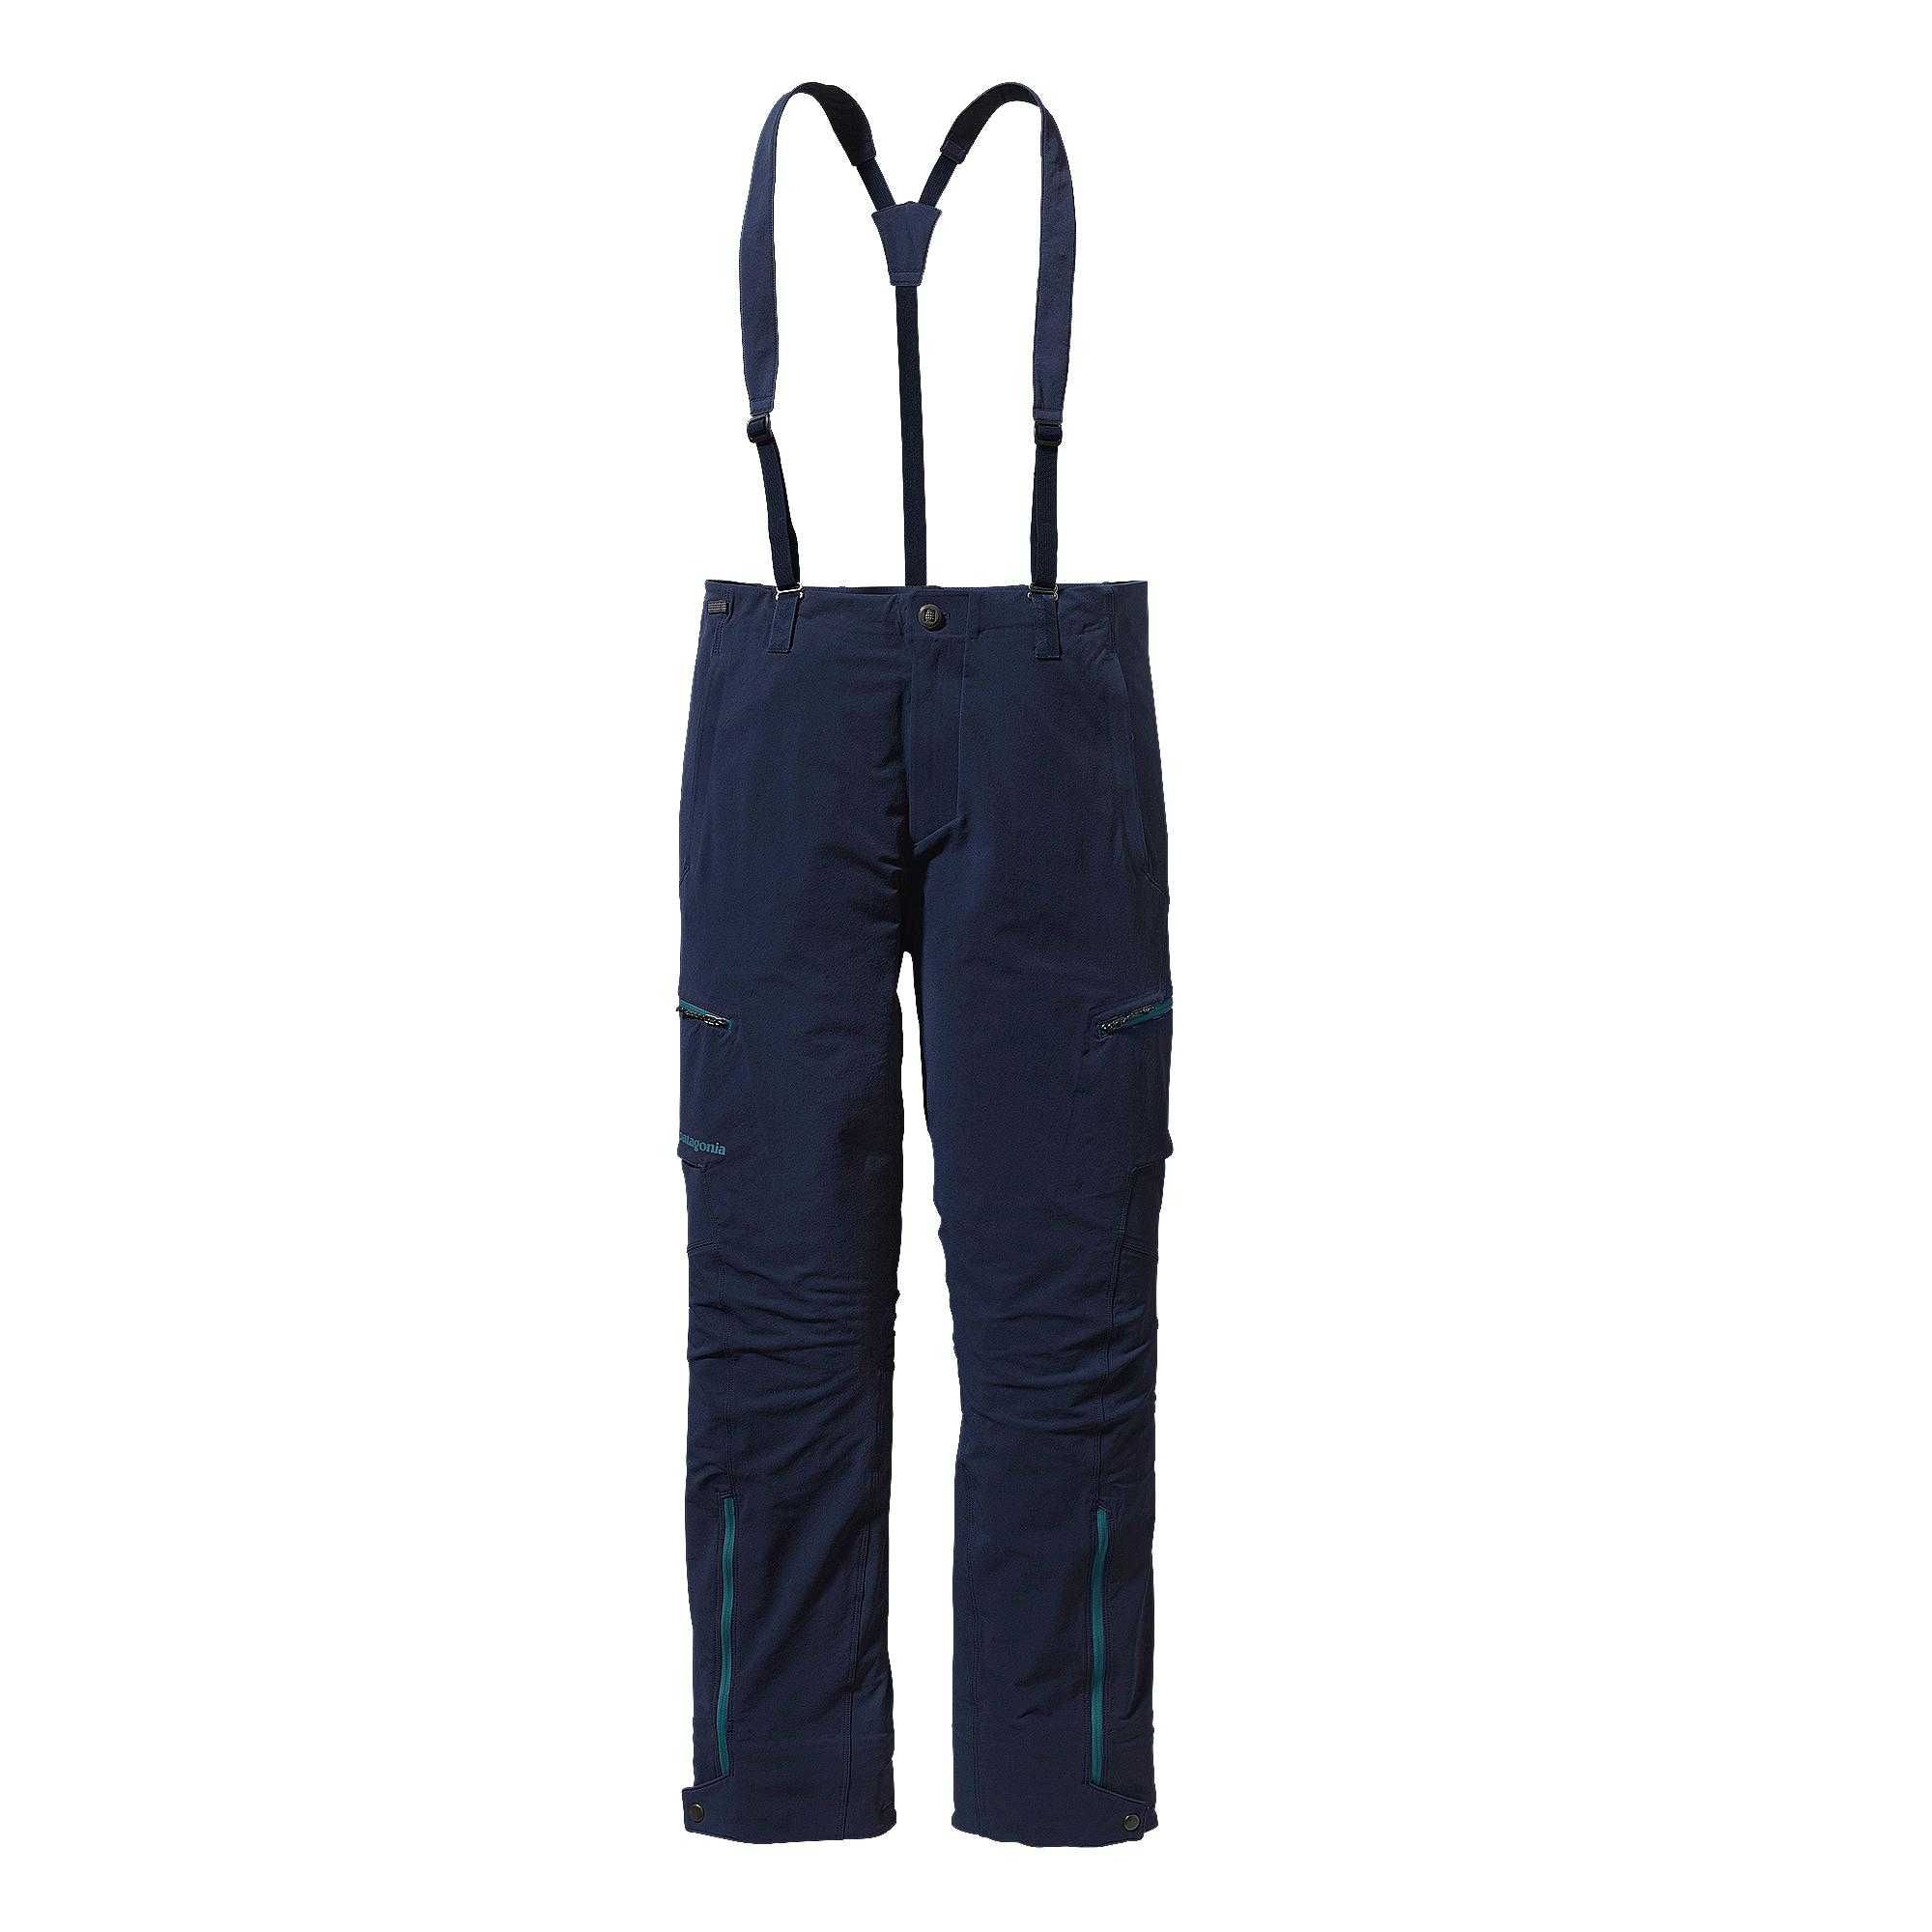 Dual Point Alpine Pants - Navy Blue/Deep SEa Blue